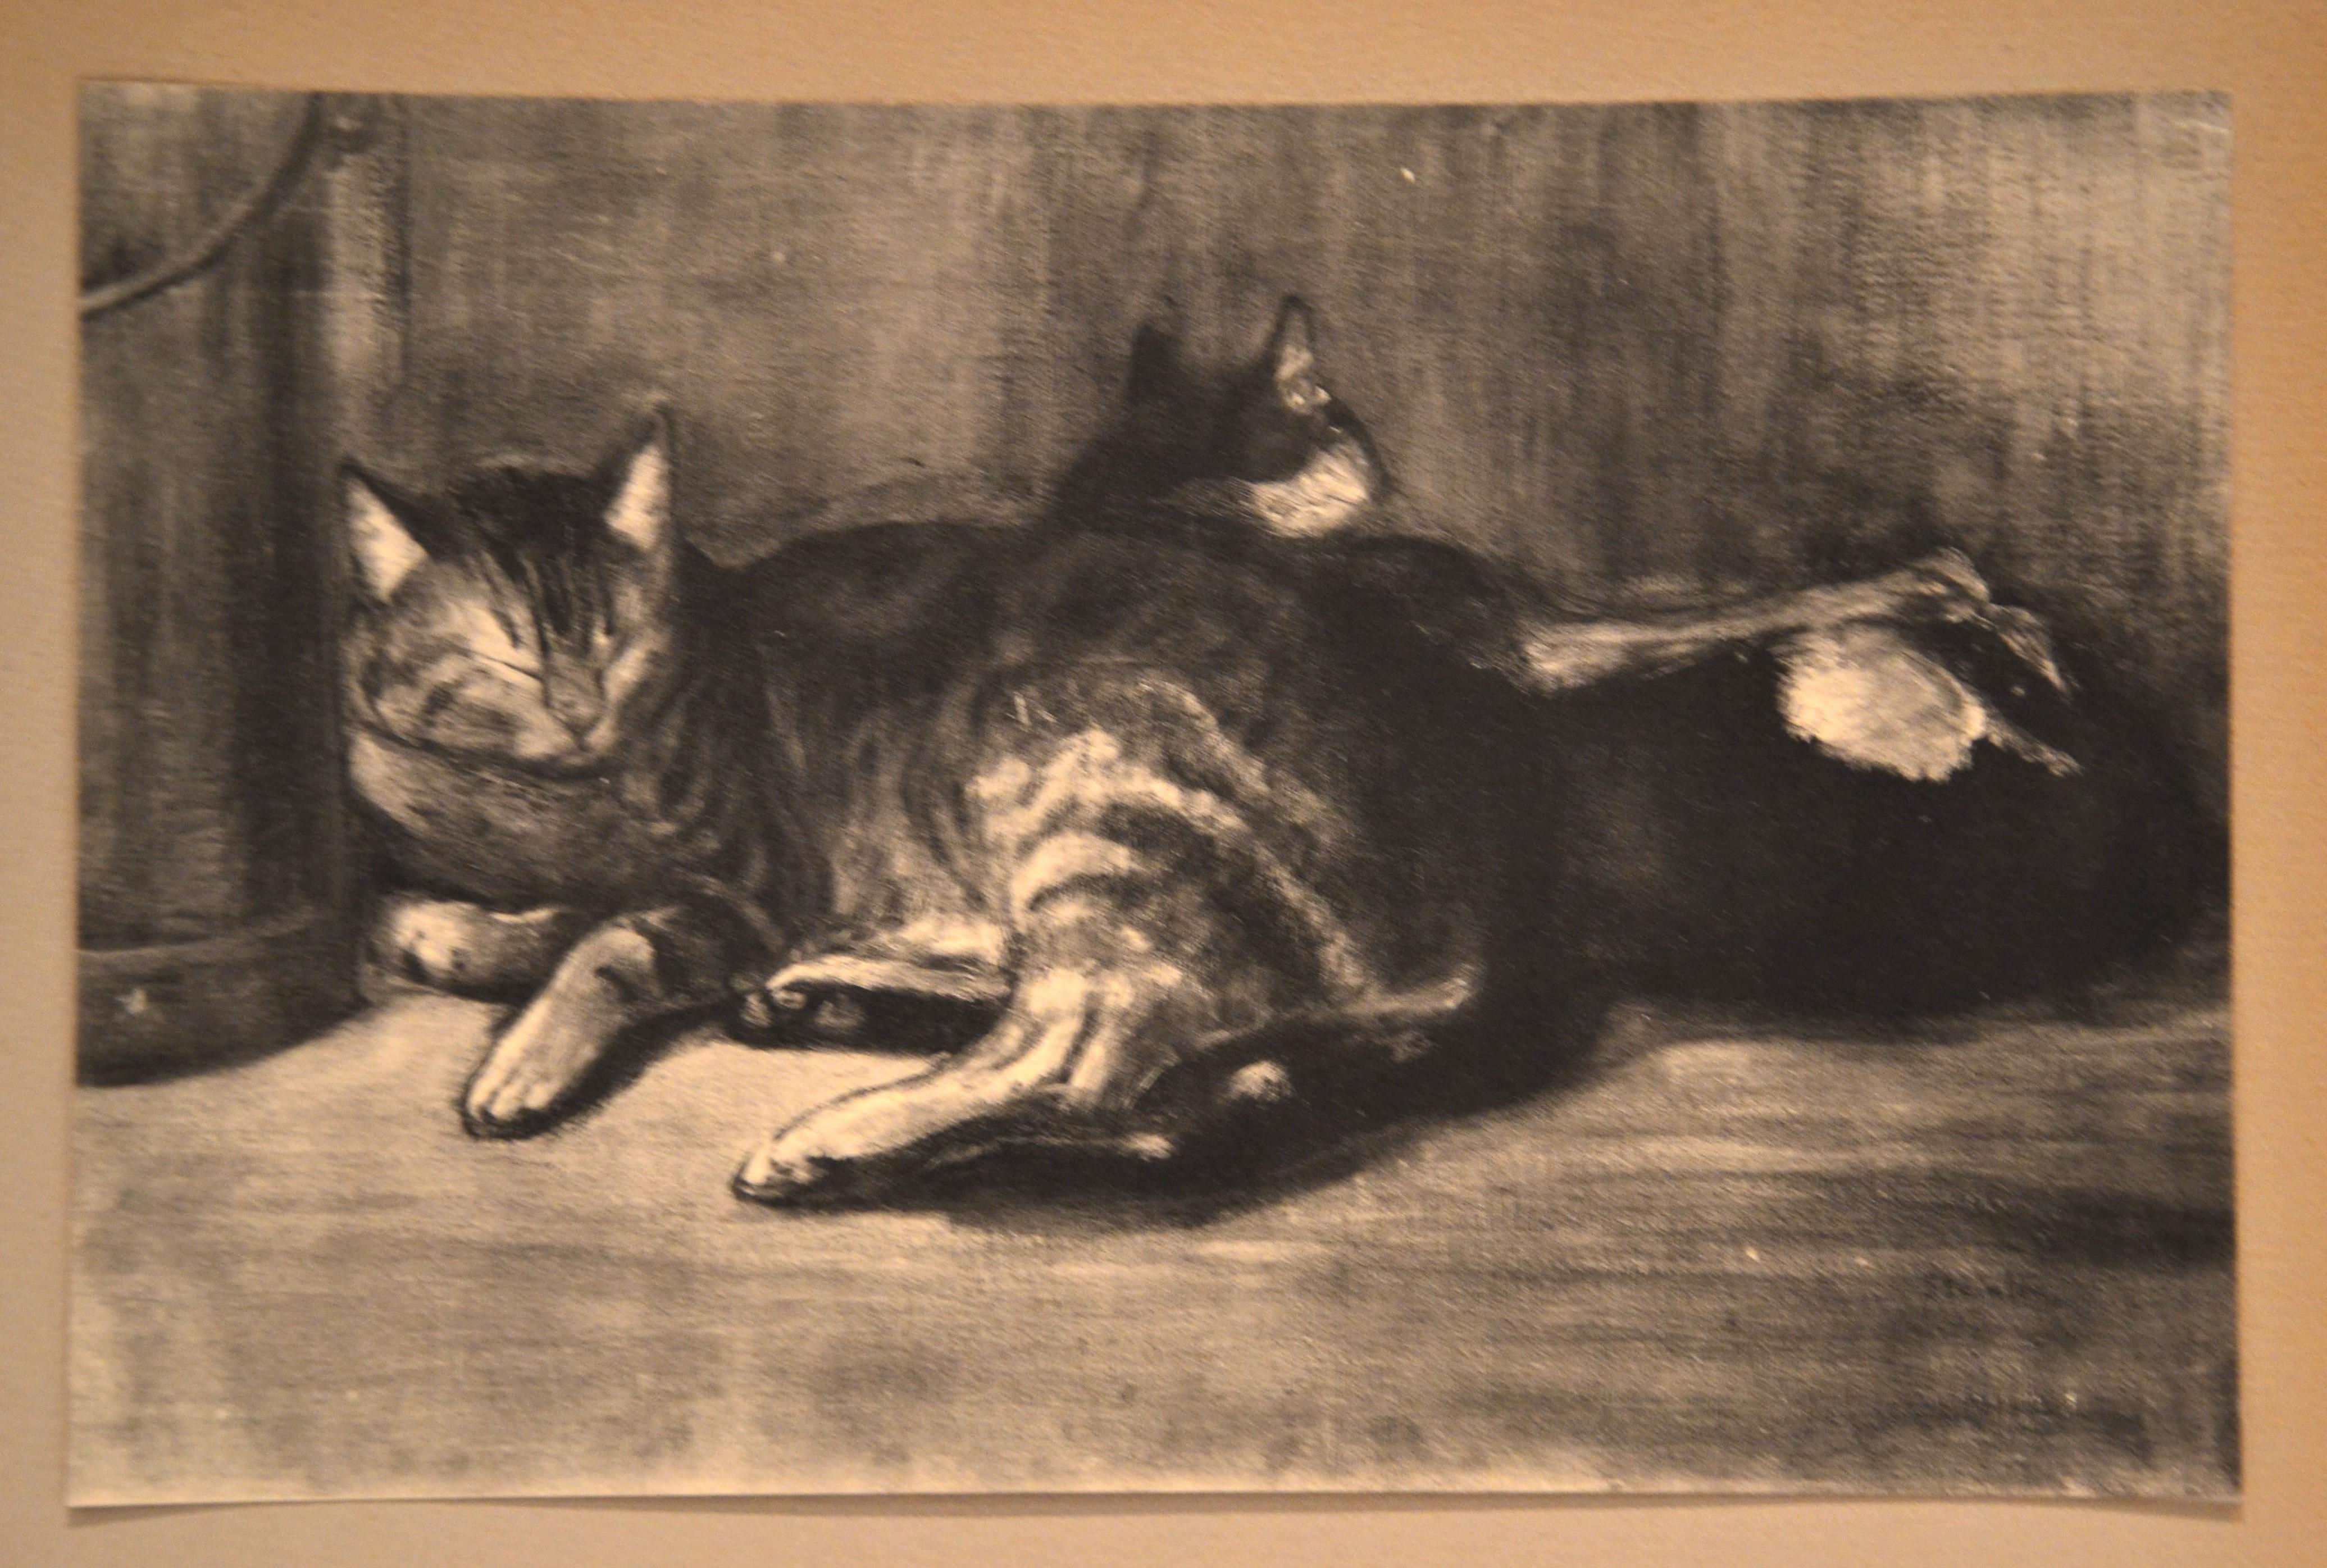 Théophile Alexandre Steinlen Animal Print - Cats - From Chats et Autres Bêtes - Original Lithograph 1933